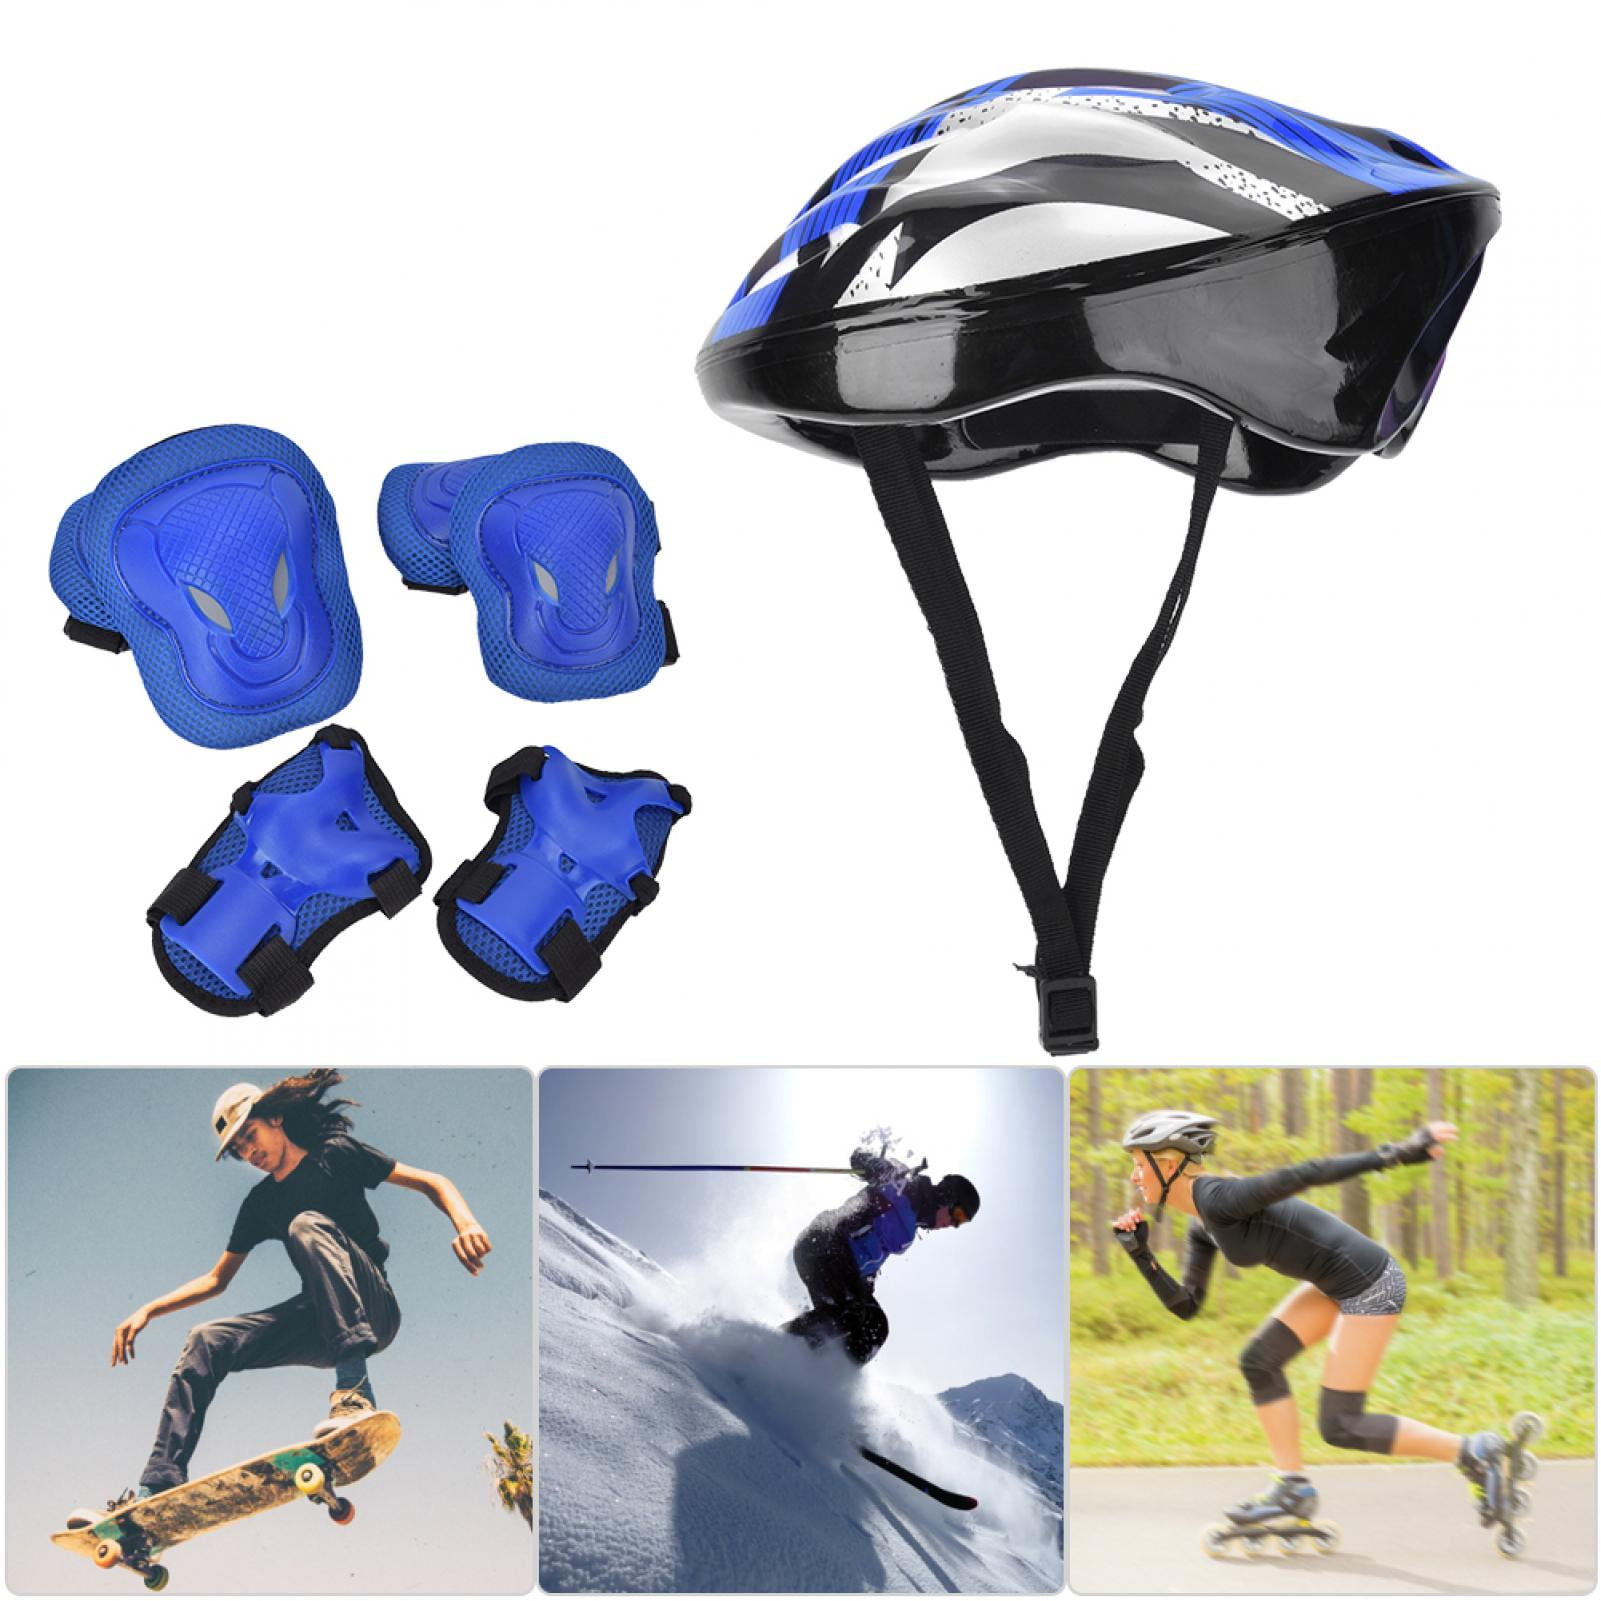 7x Adult Roller Skating Protective Gear Set Knee Pads Elbow Pads Gloves Helmet 